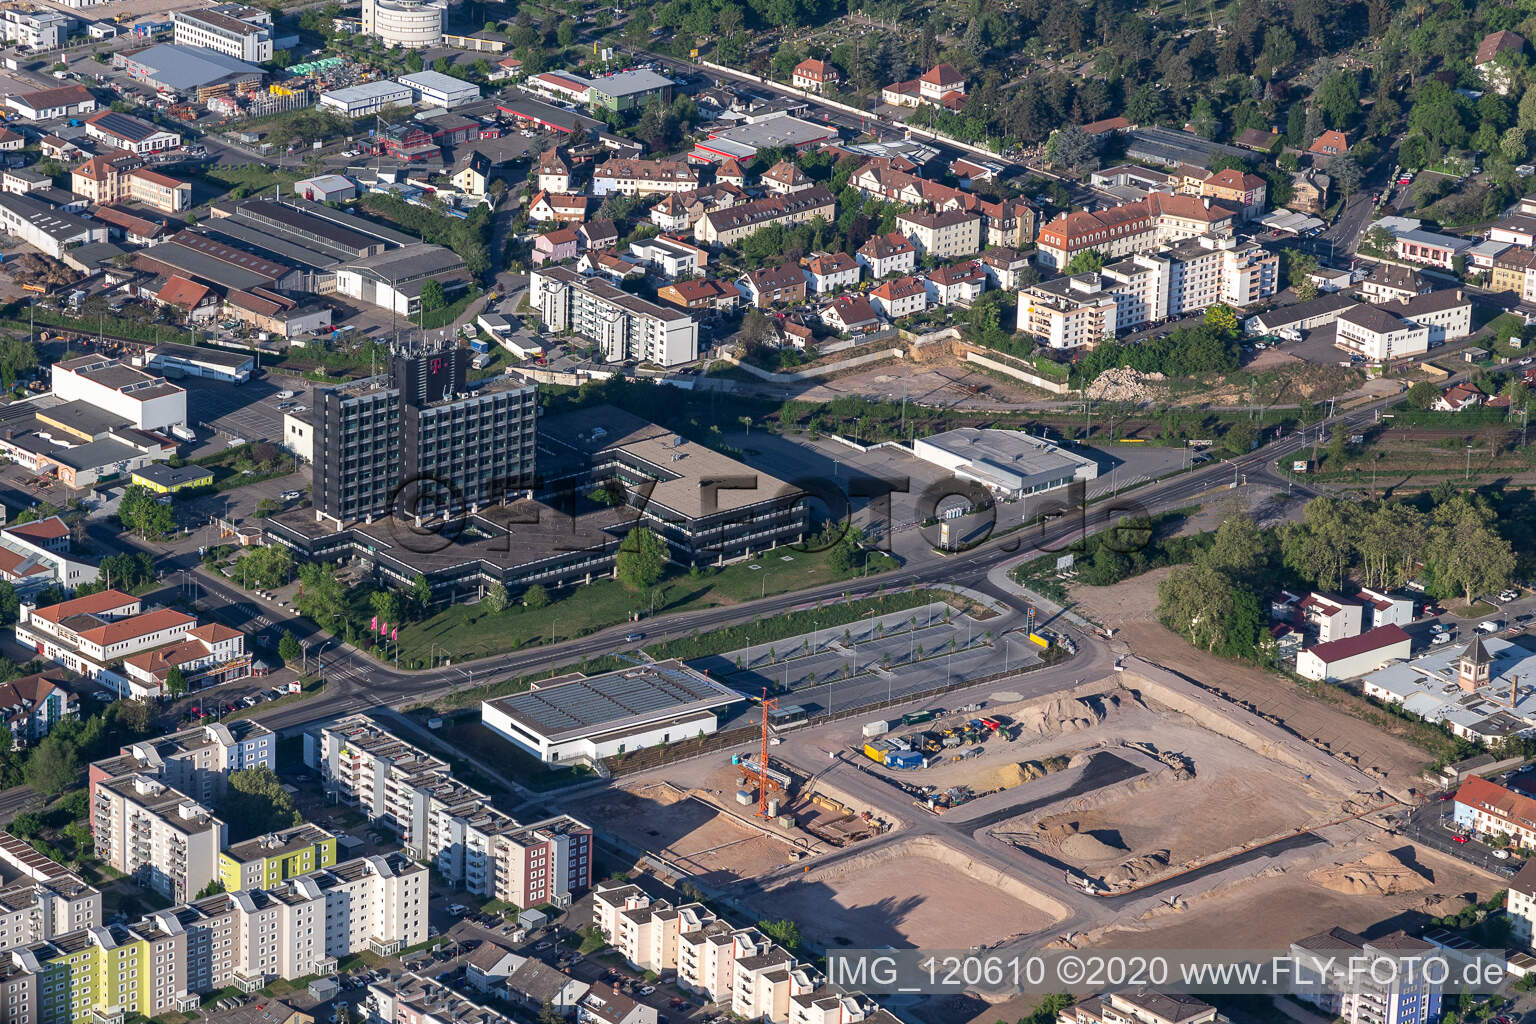 Aerial view of Construction site in front of Deutsche Telekom in Neustadt an der Weinstraße in the state Rhineland-Palatinate, Germany